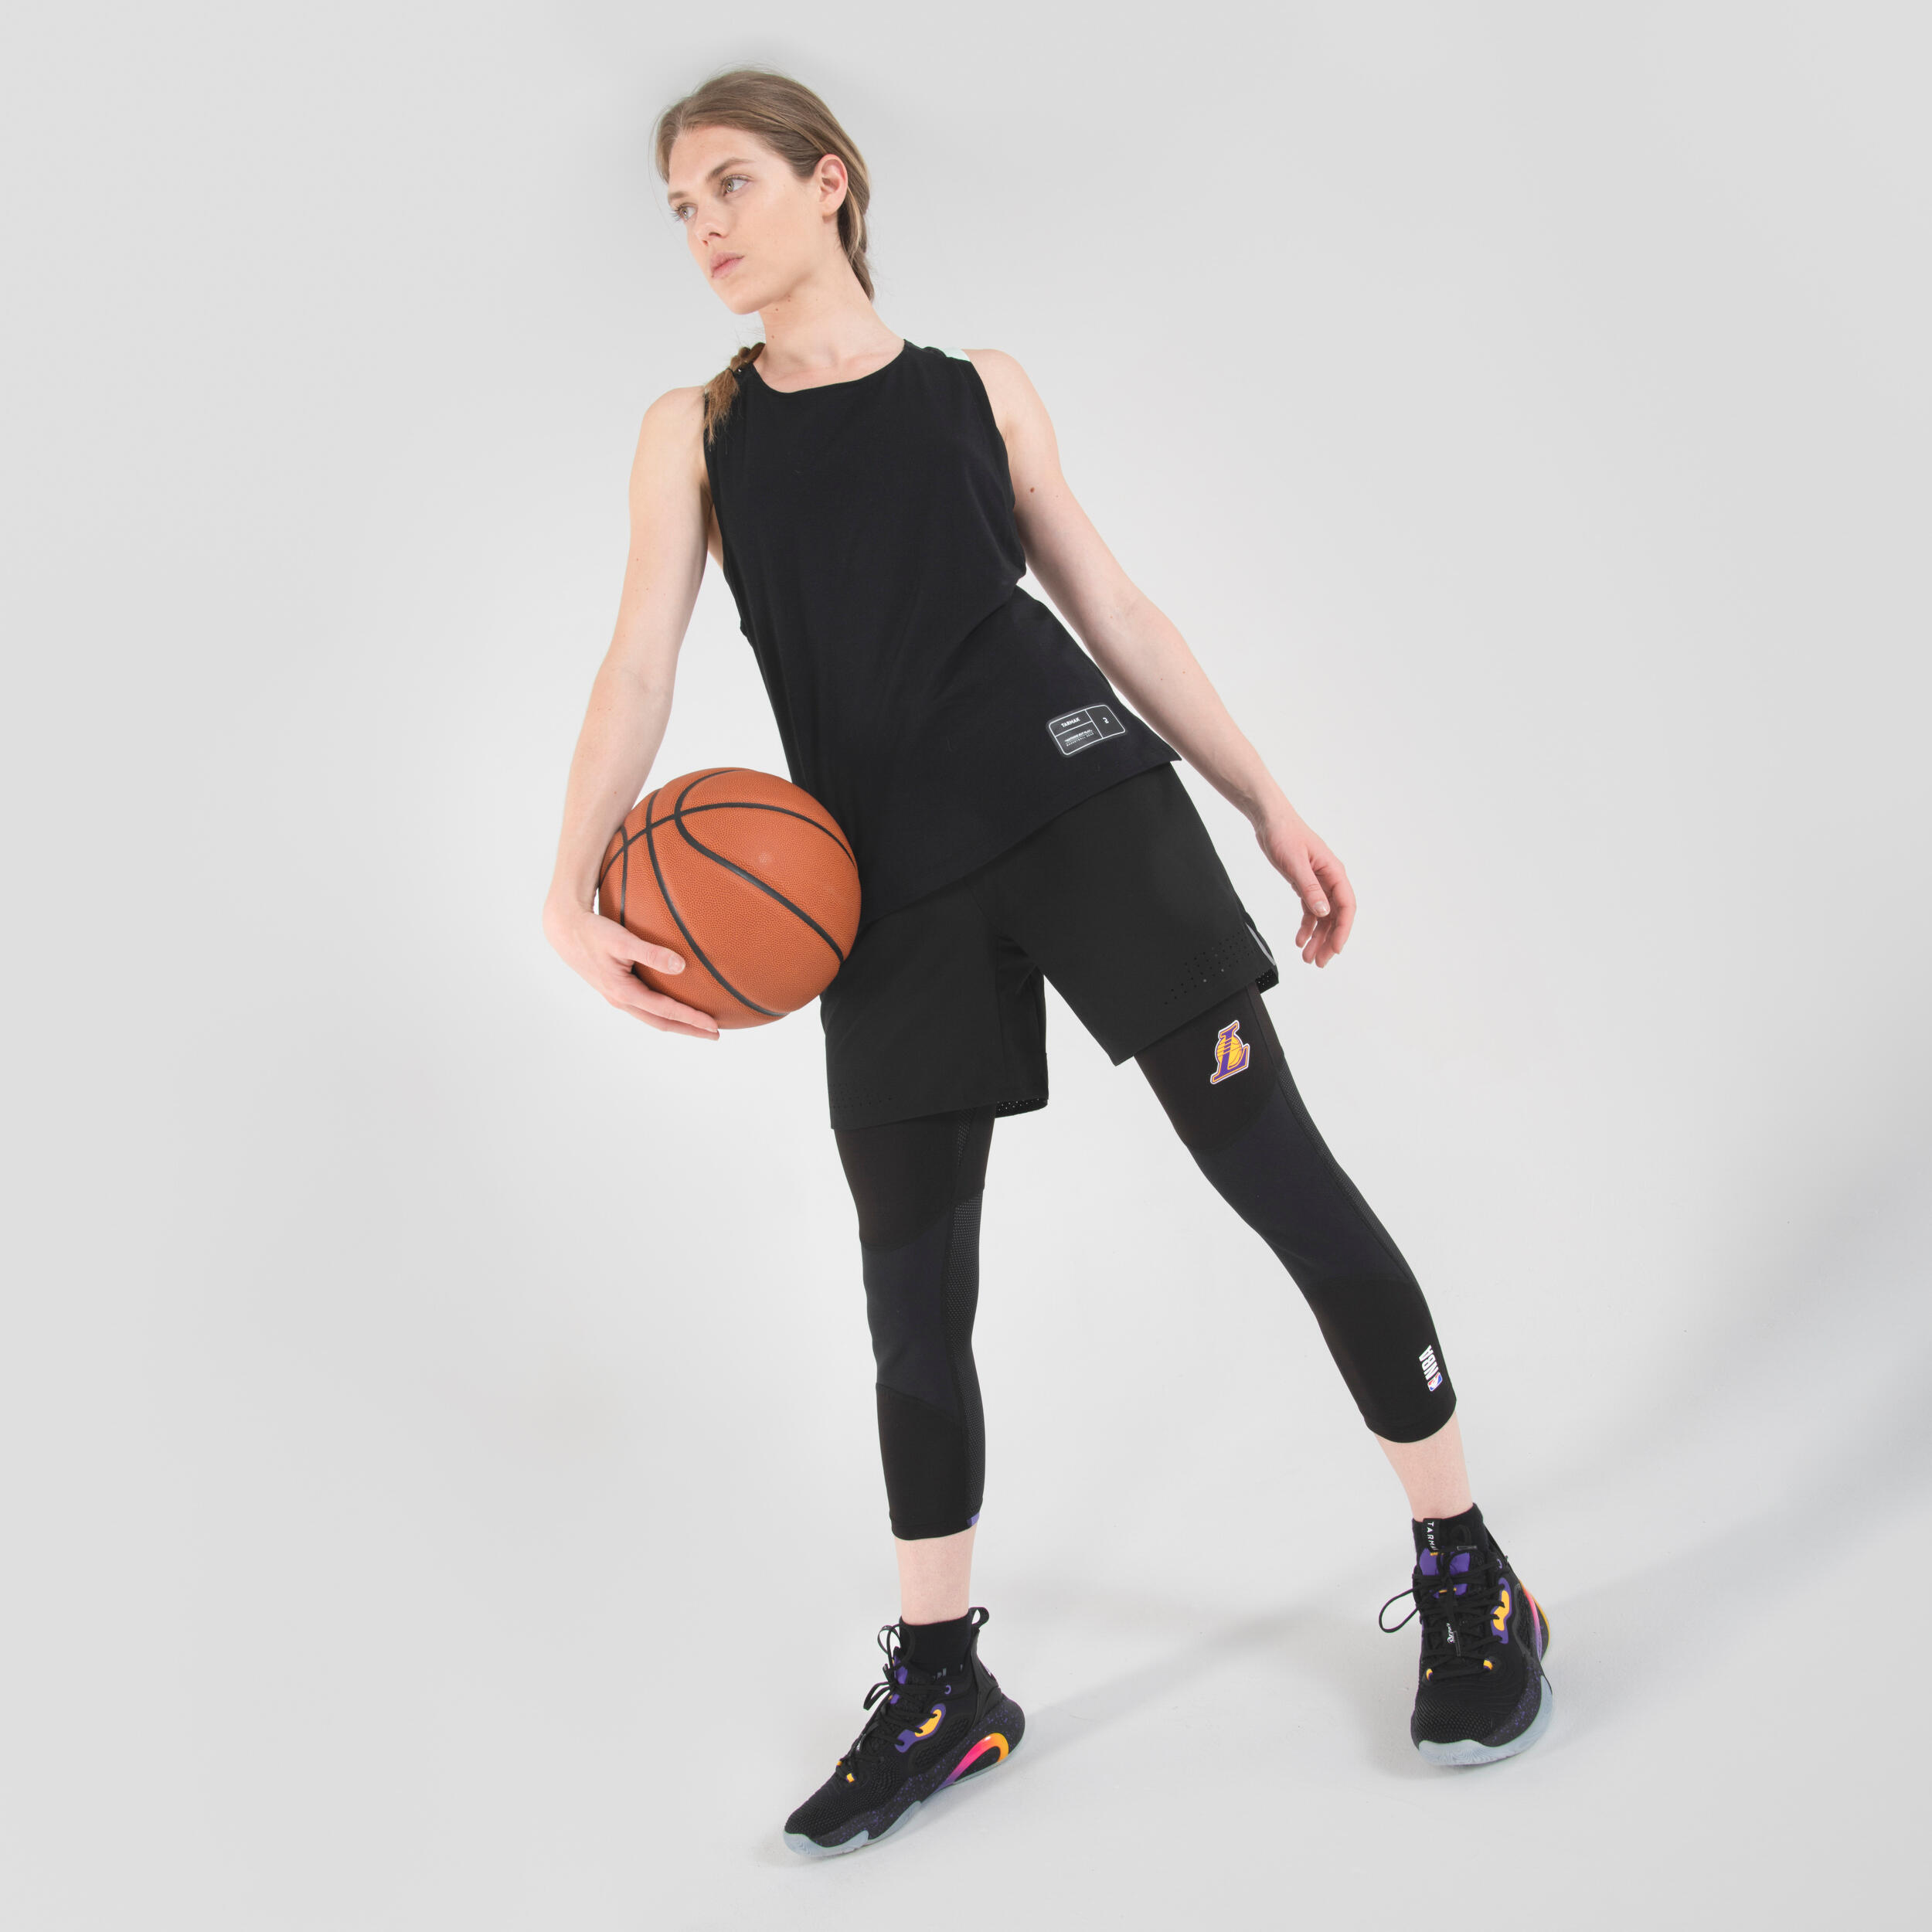 Women's Sleeveless Basketball Jersey T500 - Black 7/7